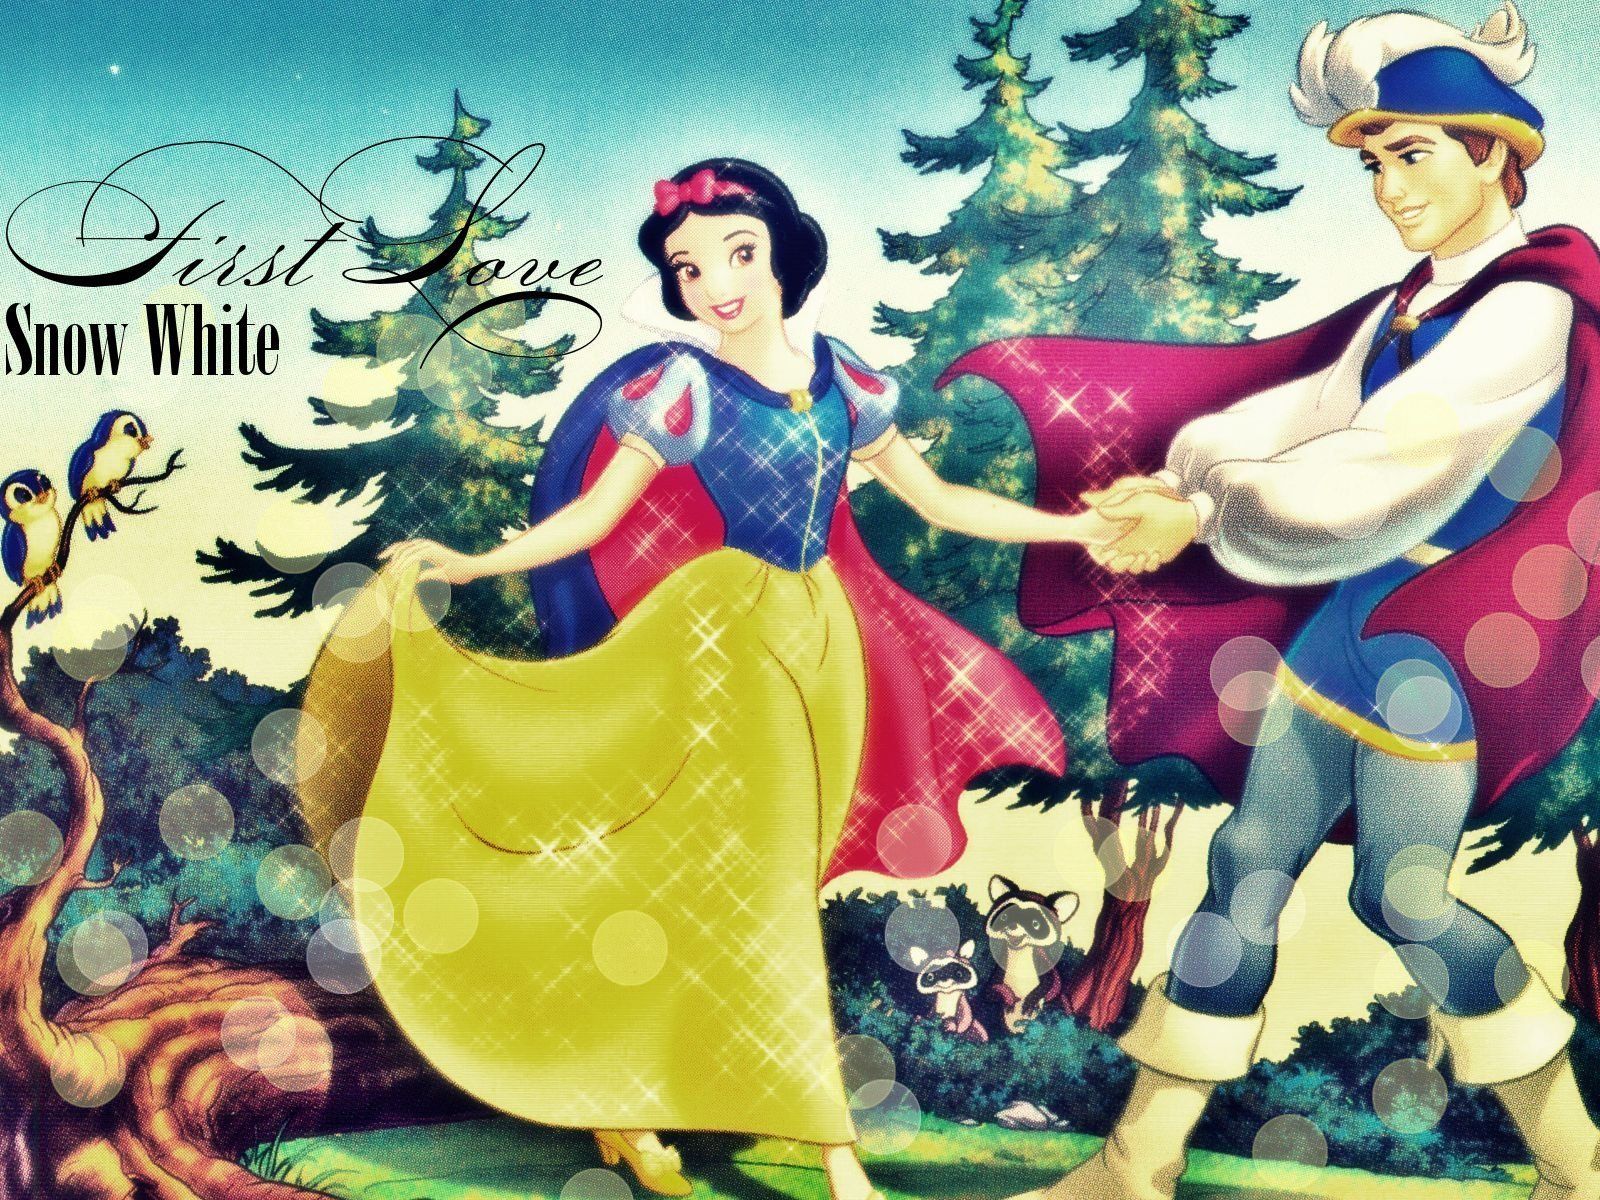 Disney Princess Snow White Wallpaper Image for iPhone